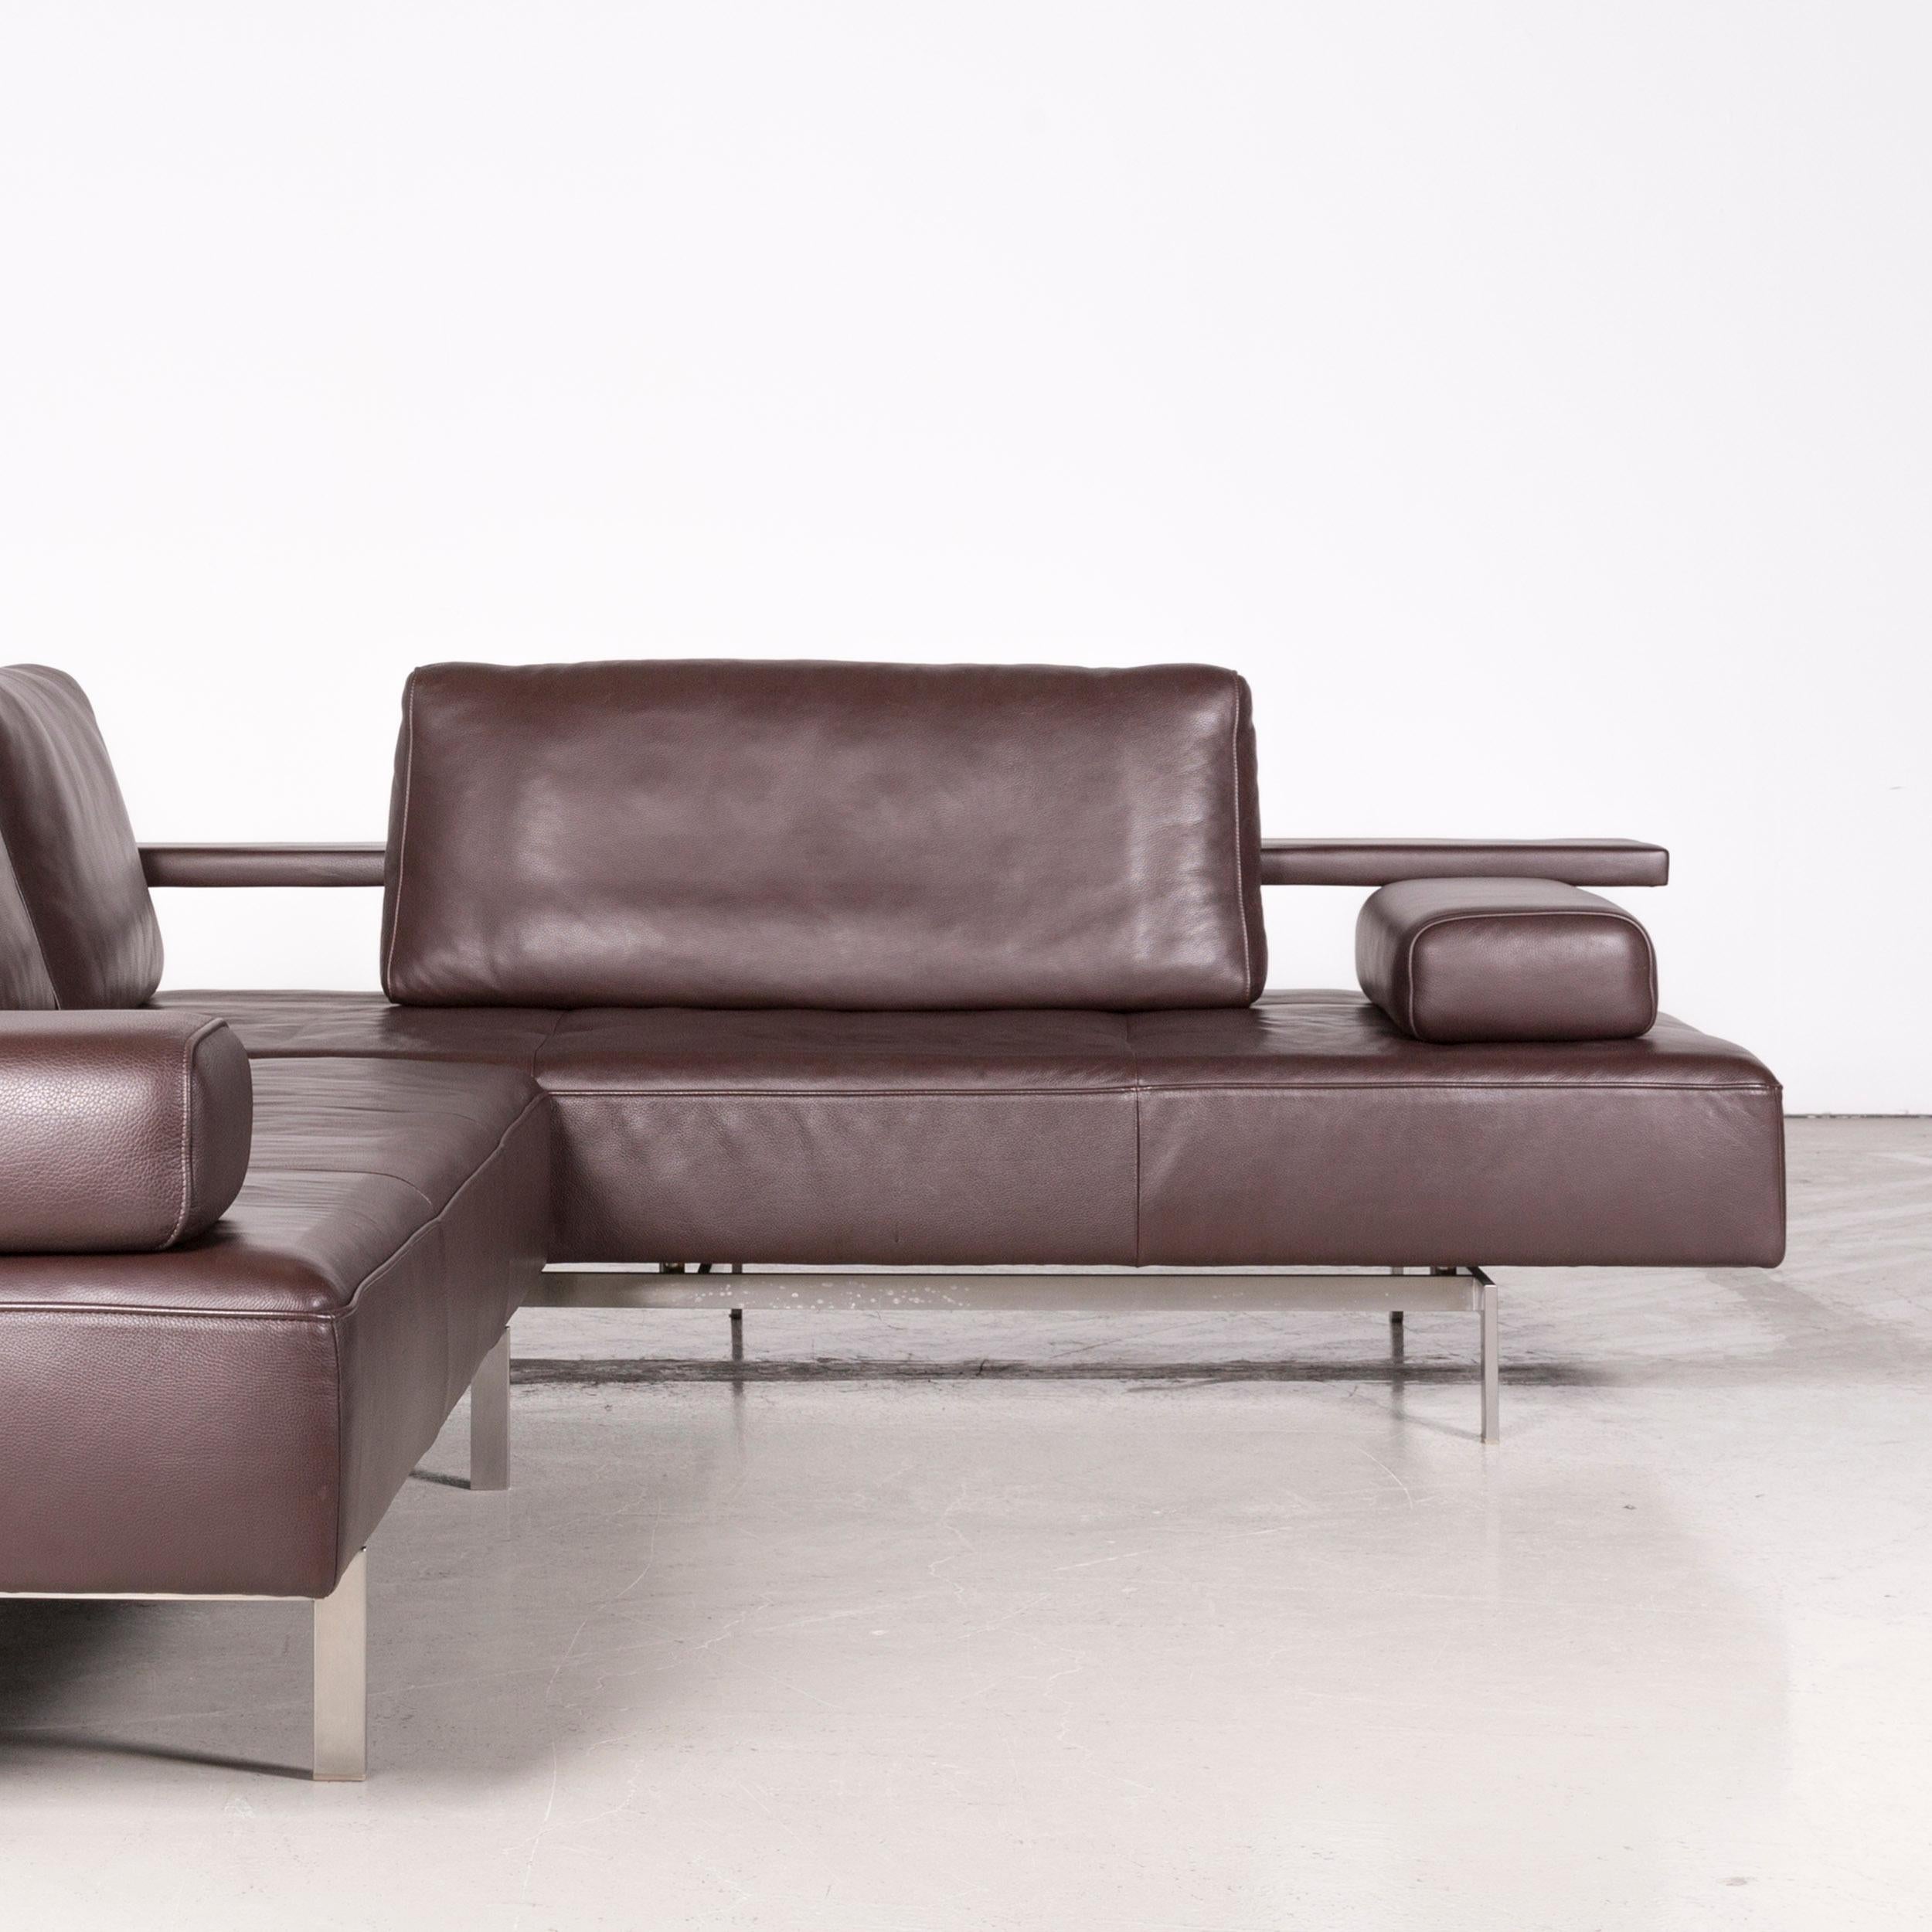 German Rolf Benz Dono Designer Leather Corner Sofa Brown Genuine Leather Sofa Couch